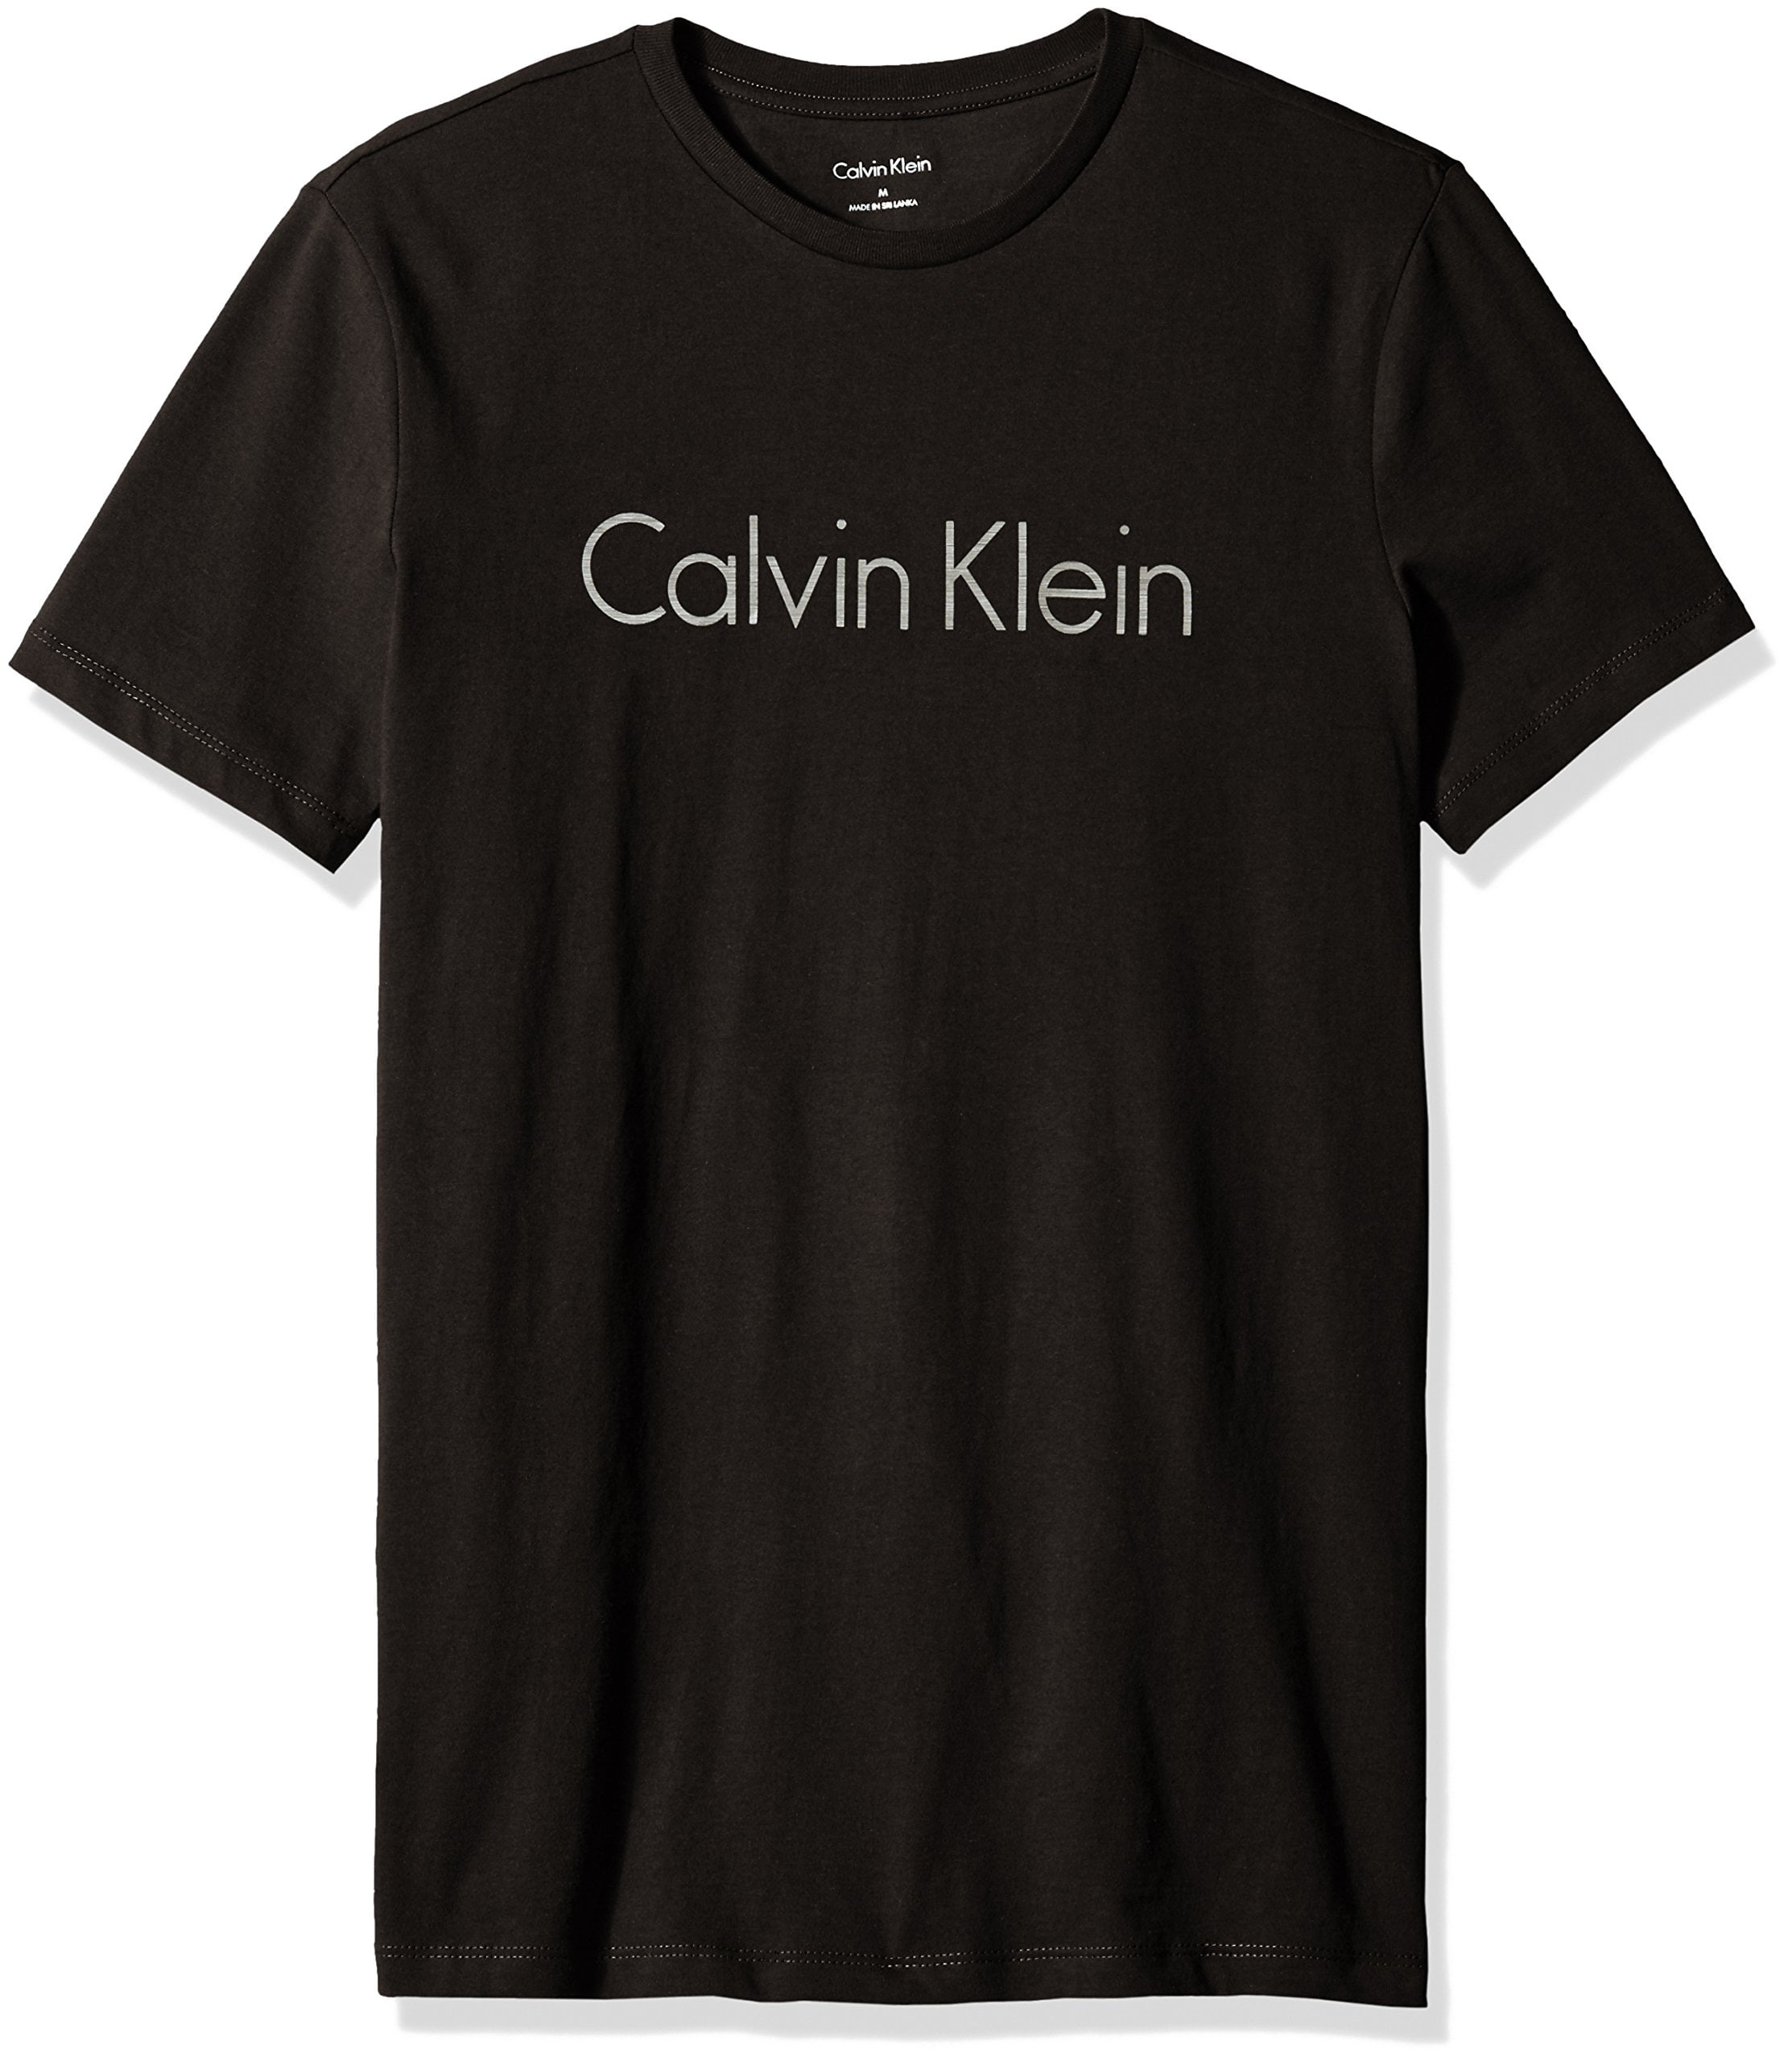 Calvin Klein - Calvin Klein NEW Black Mens Size Large L Crewneck ...